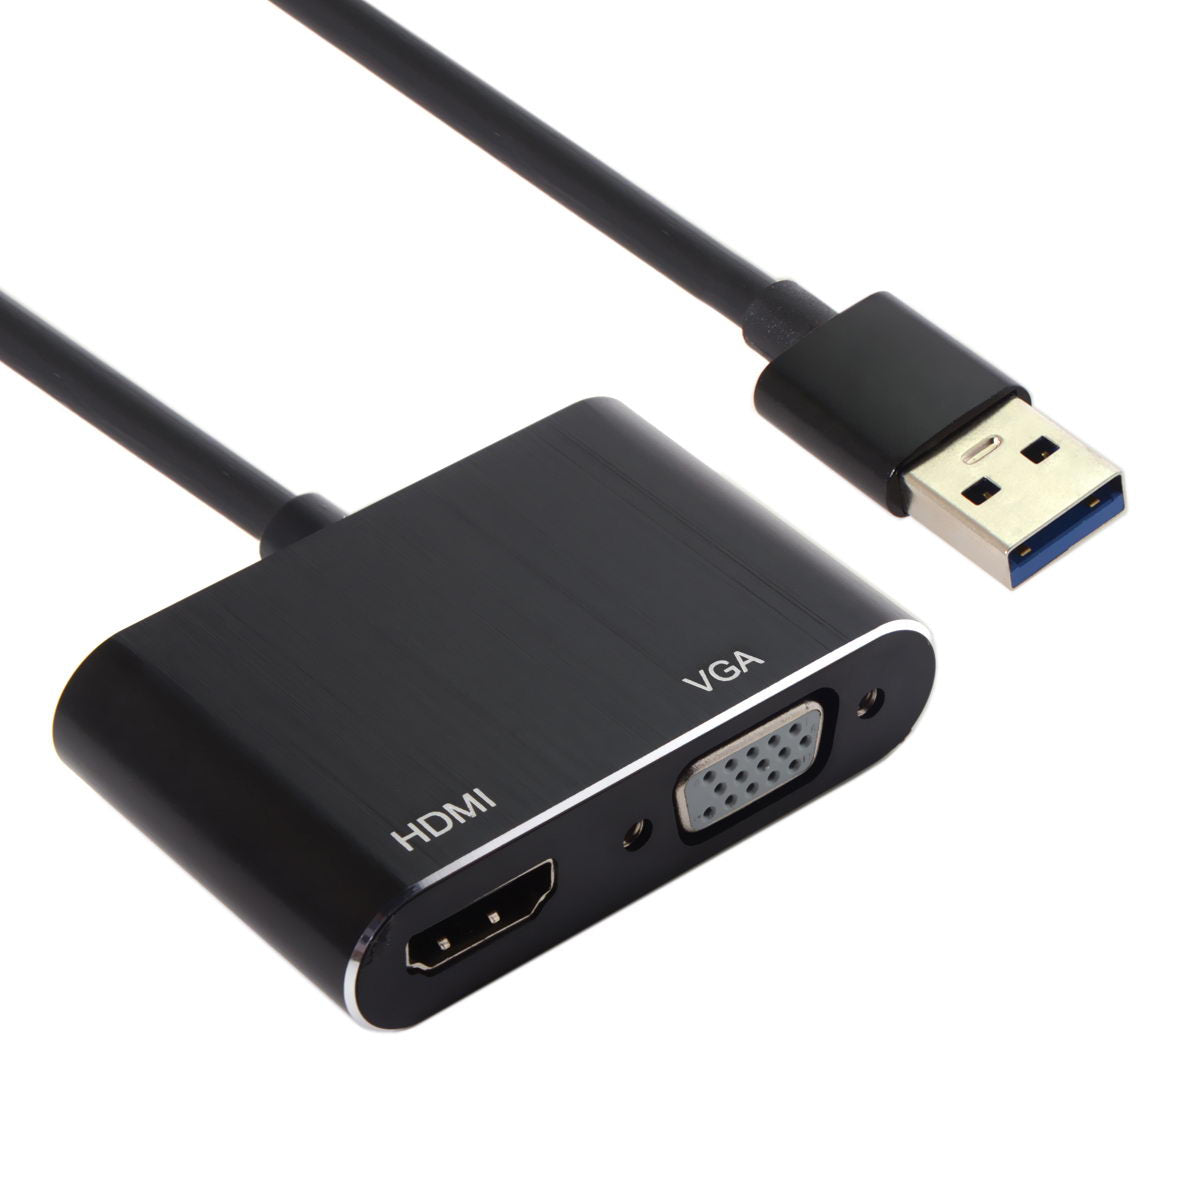 CY U3-011 USB 3.0 to HDMI + VGA Video Graphics Adapter - Black